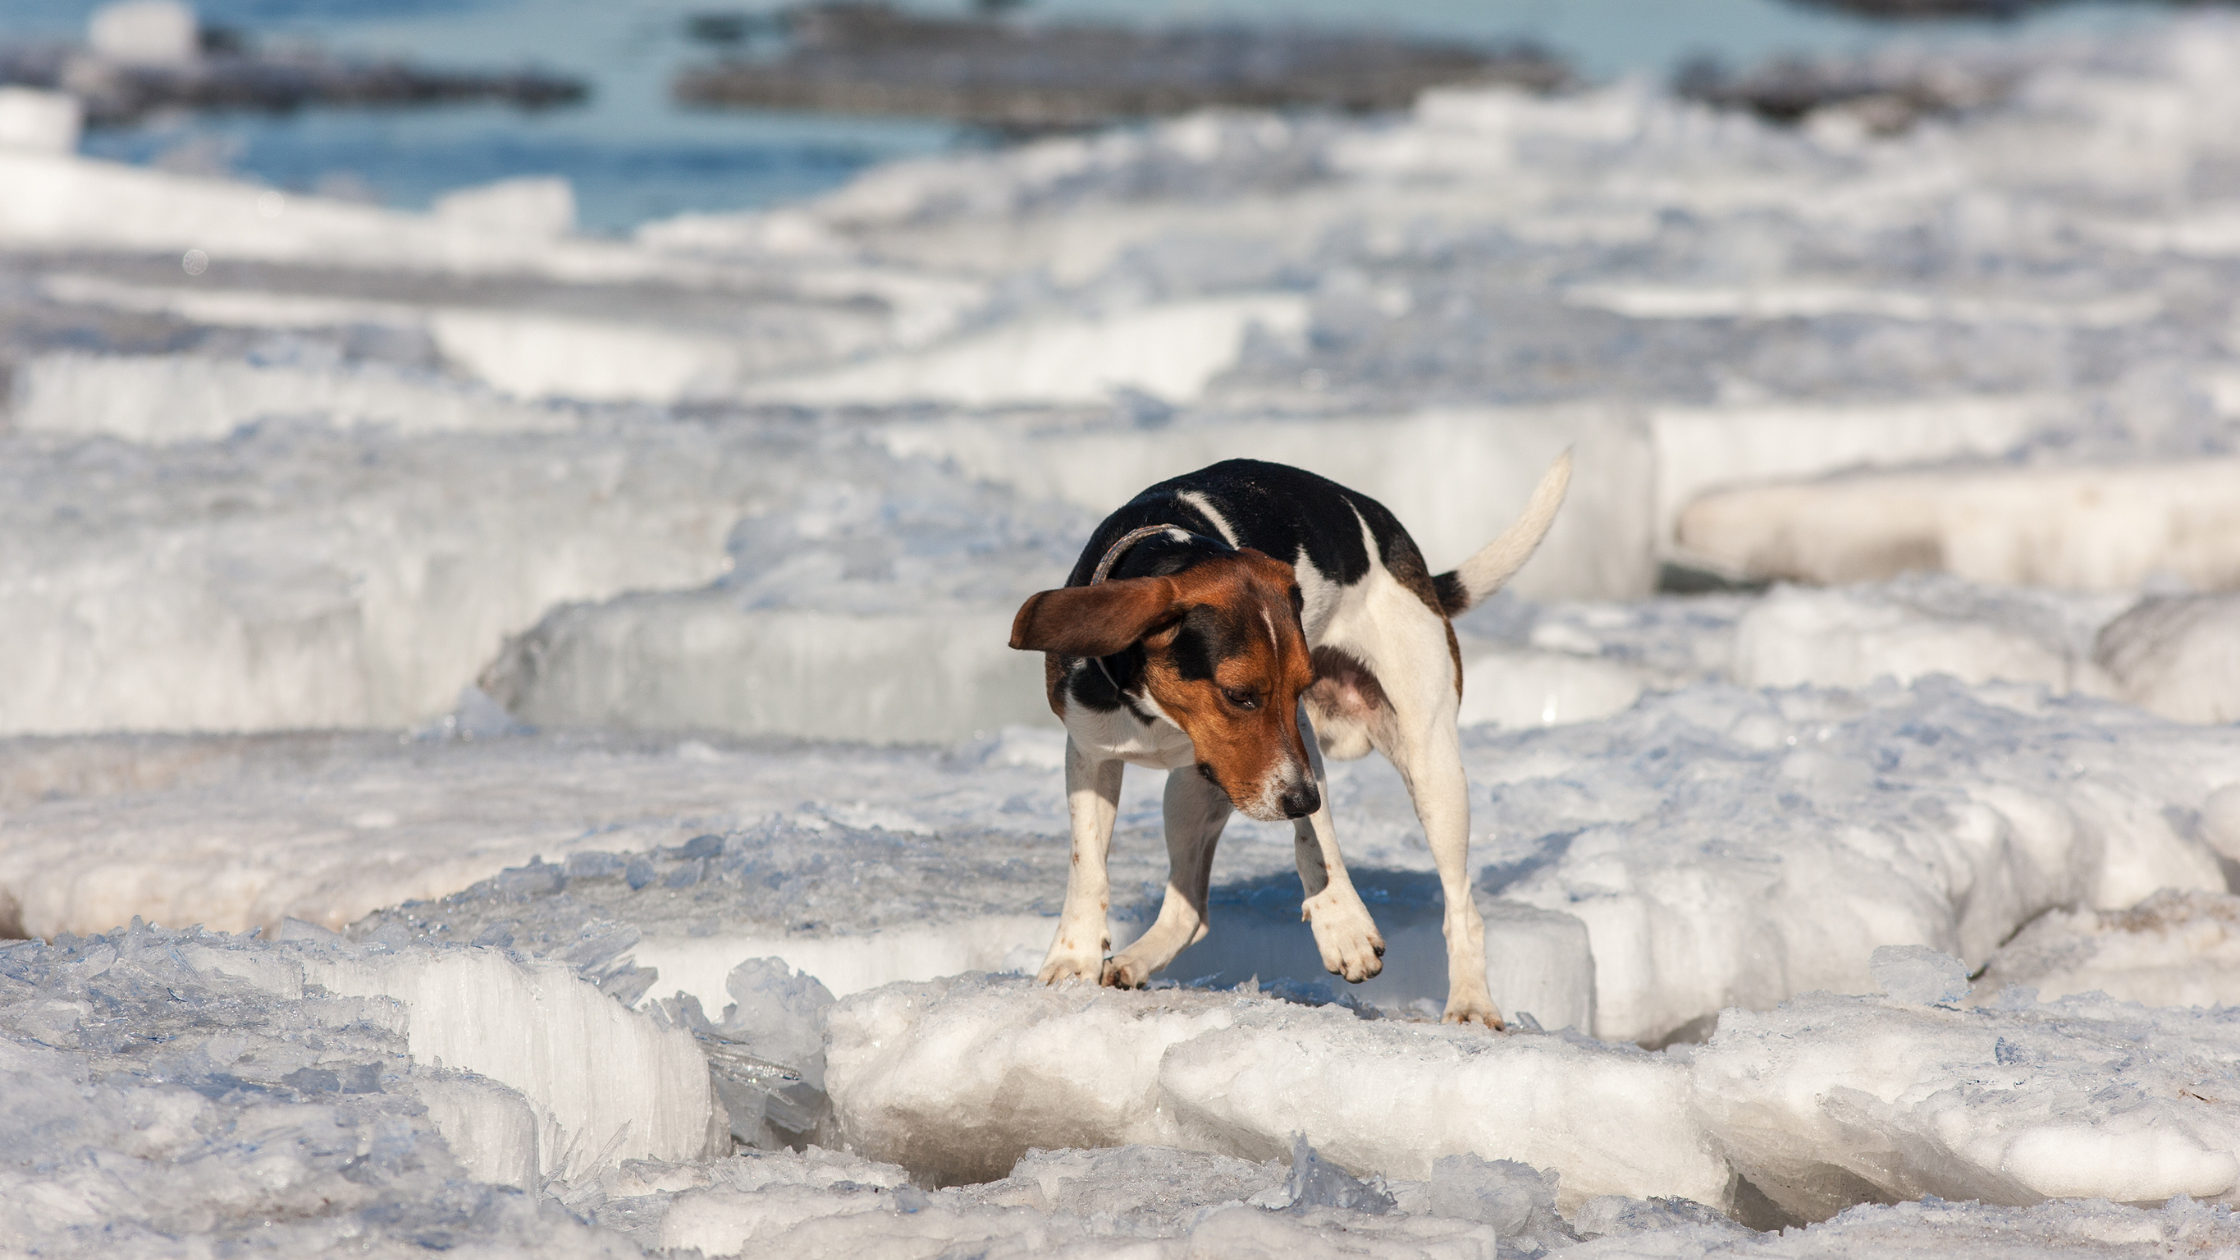 A medium sized orange, black, and white dog stands nervously on a sheet of ice.